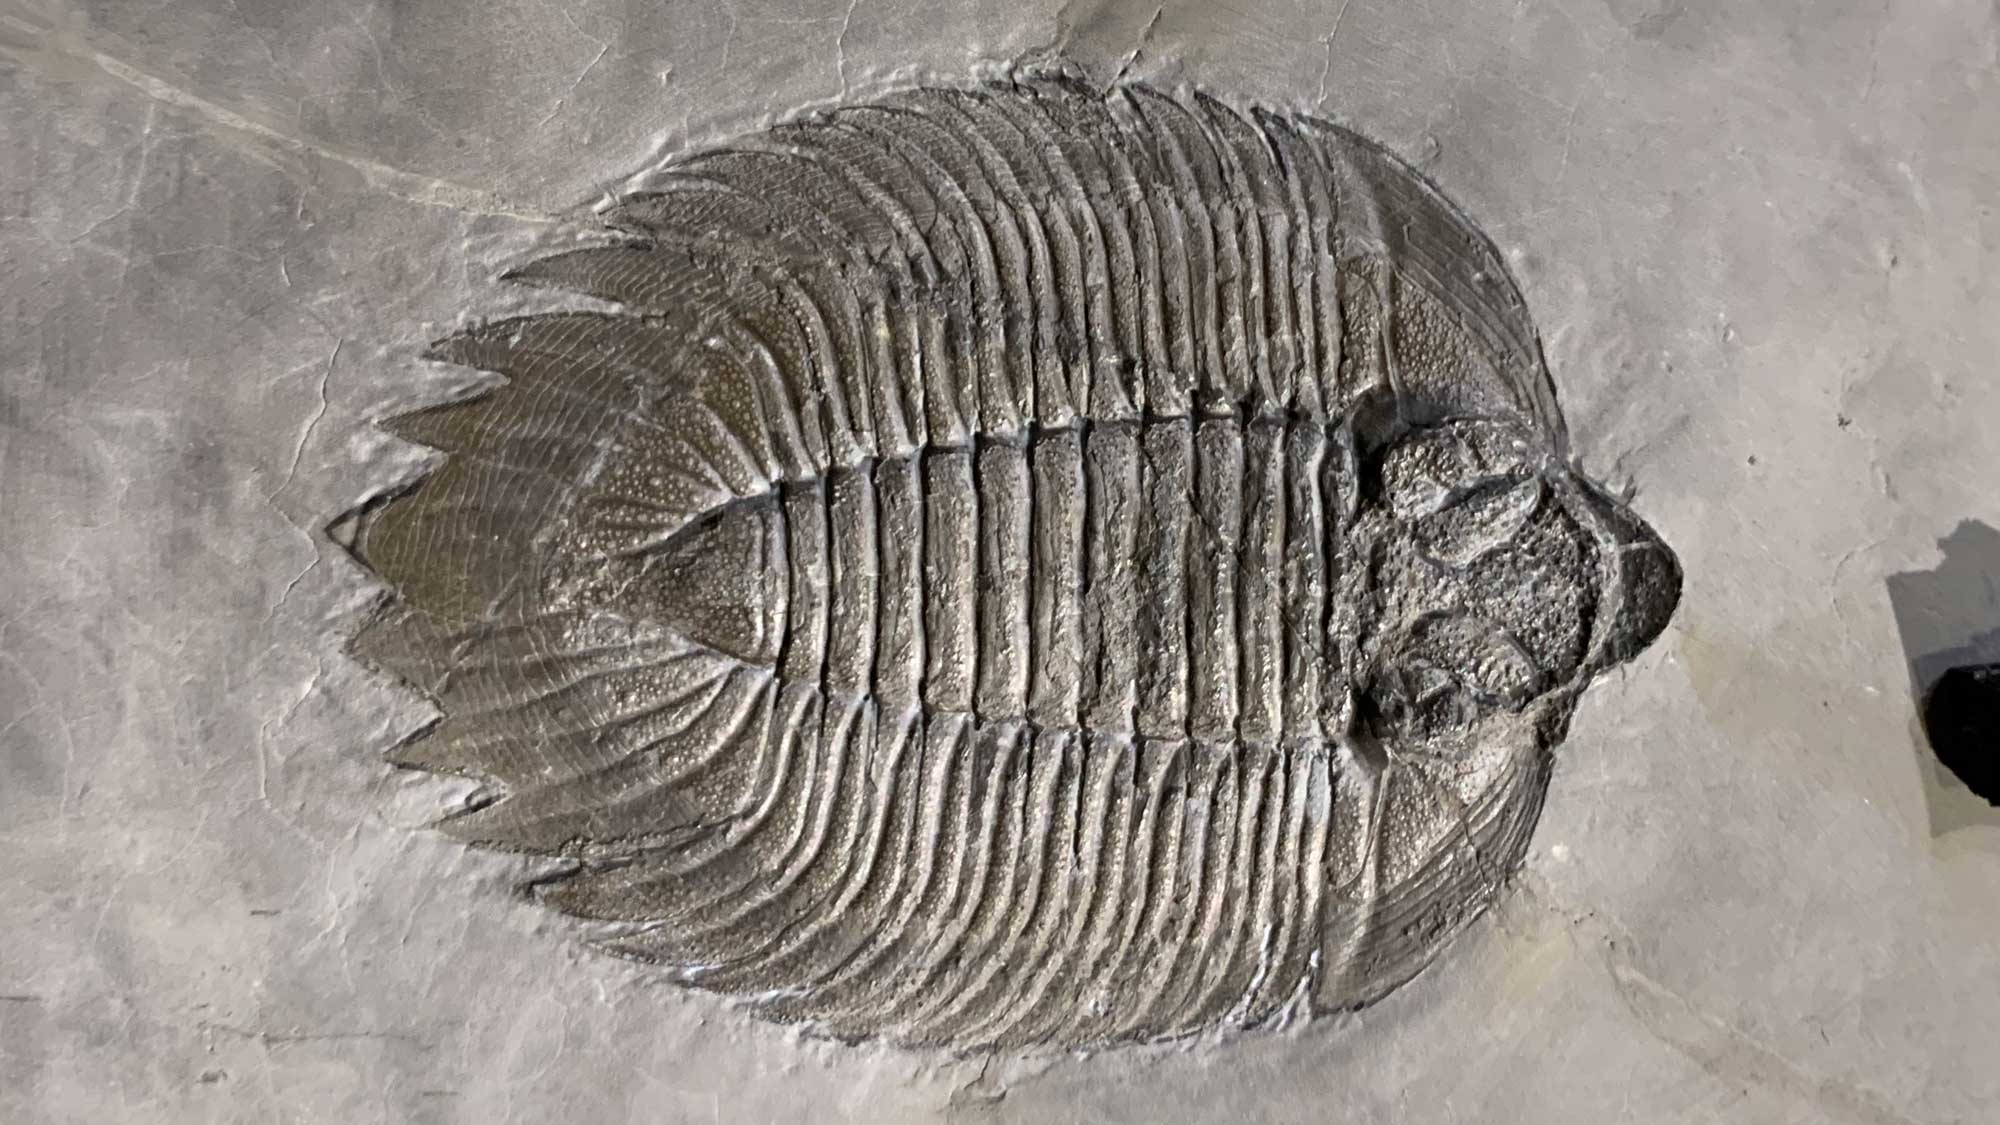 Photograph of the trilobite Arctinurus boltoni.